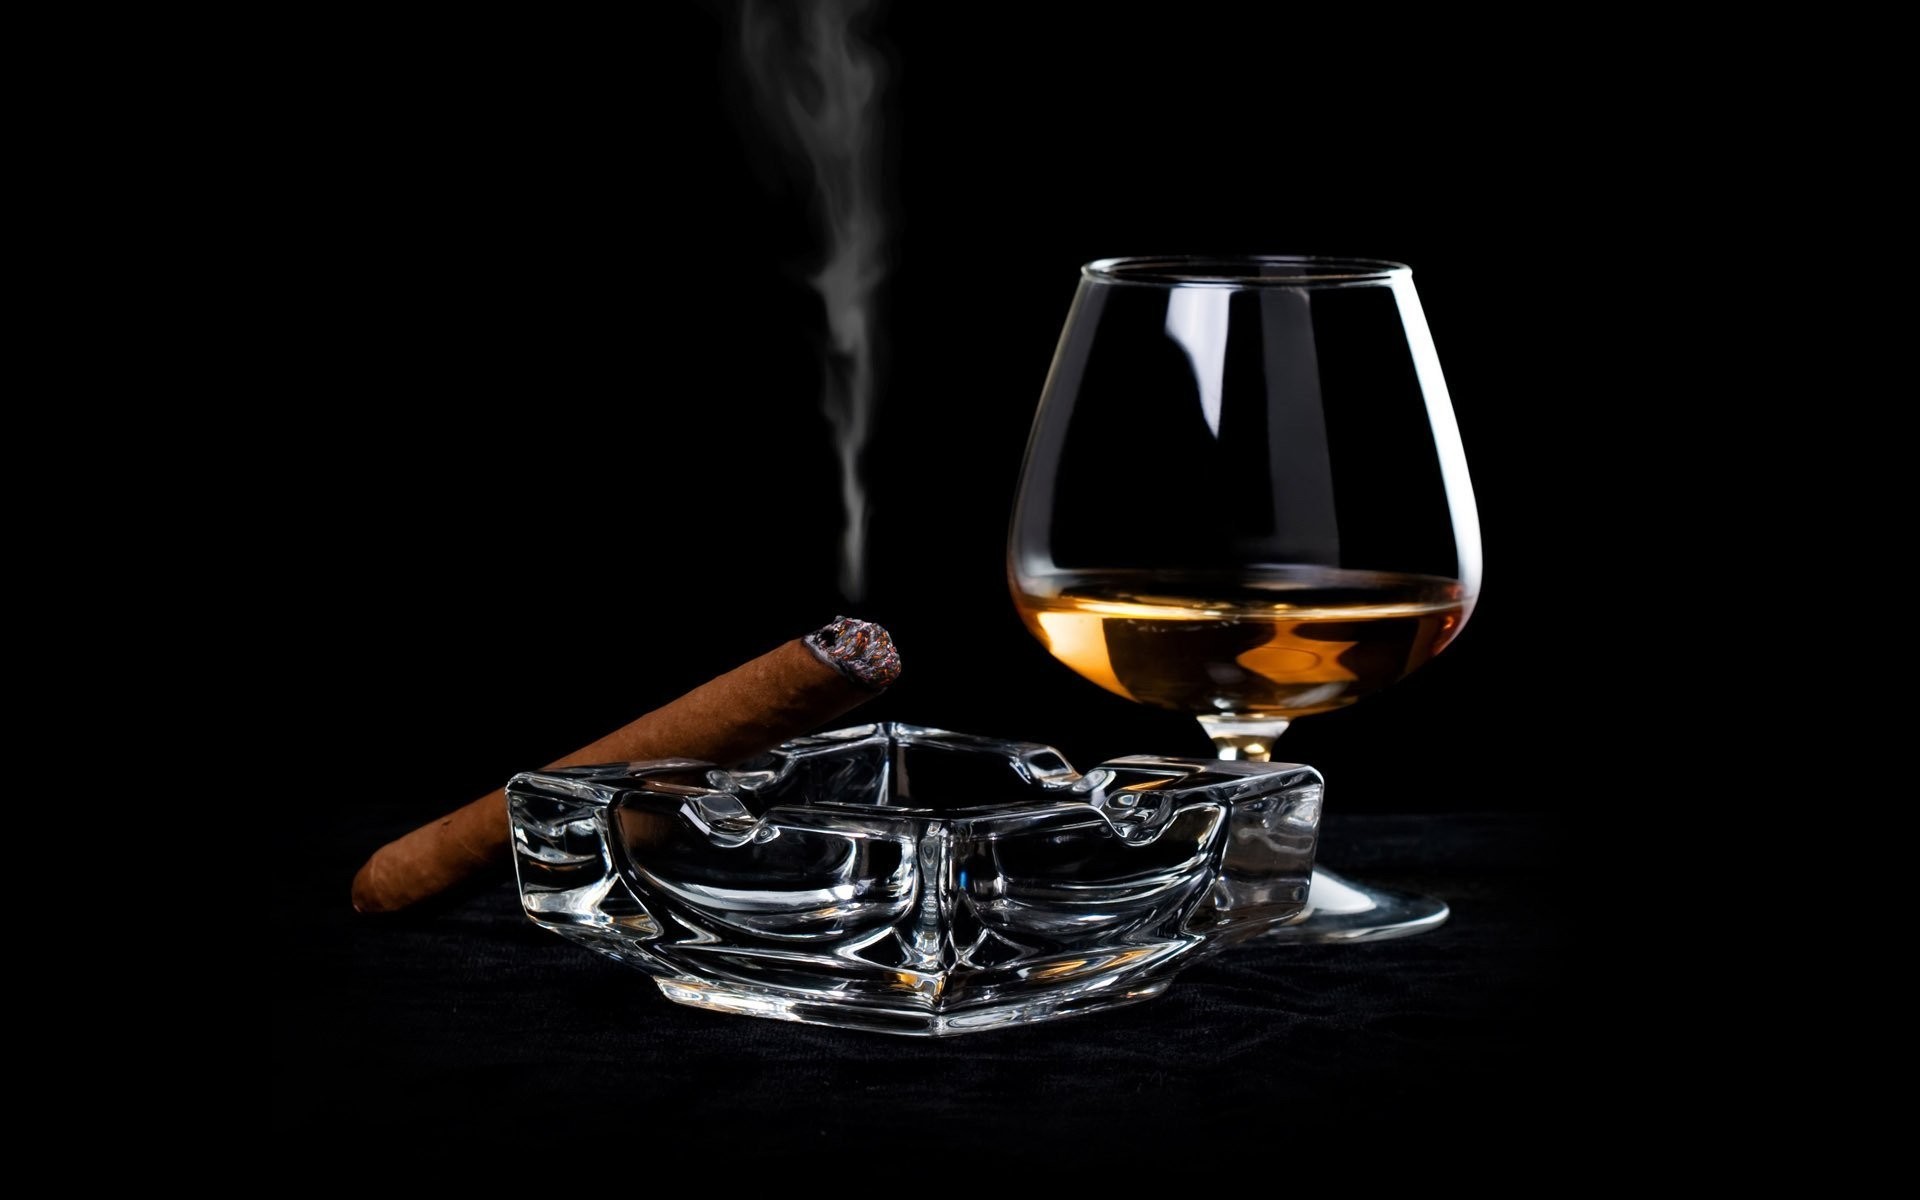 General 1920x1200 drink cognac cigars black background black ash simple background low light closeup smoke drinking glass